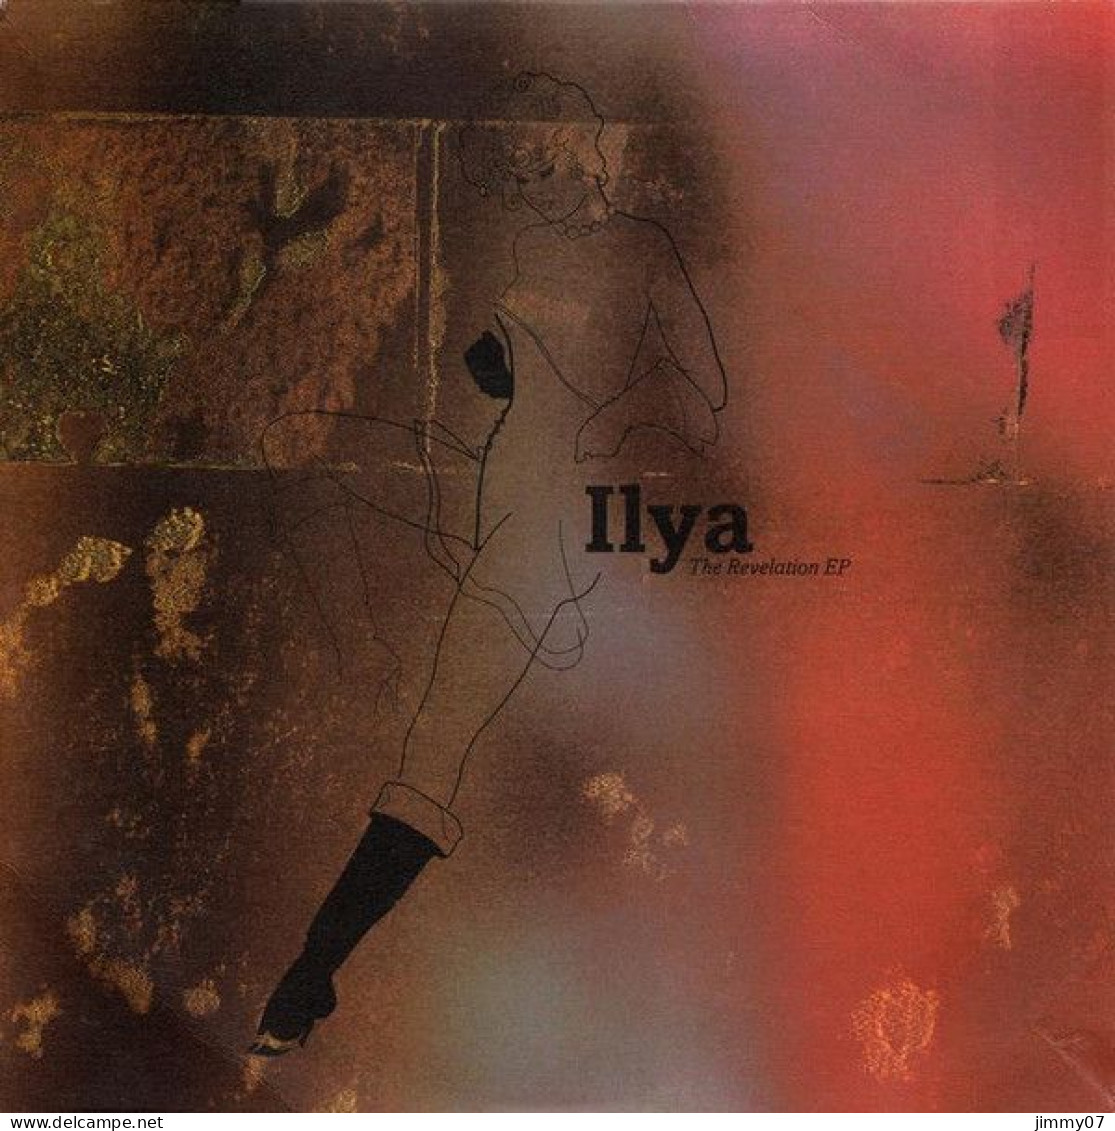 Ilya - The Revelation EP (2x10") - Special Formats